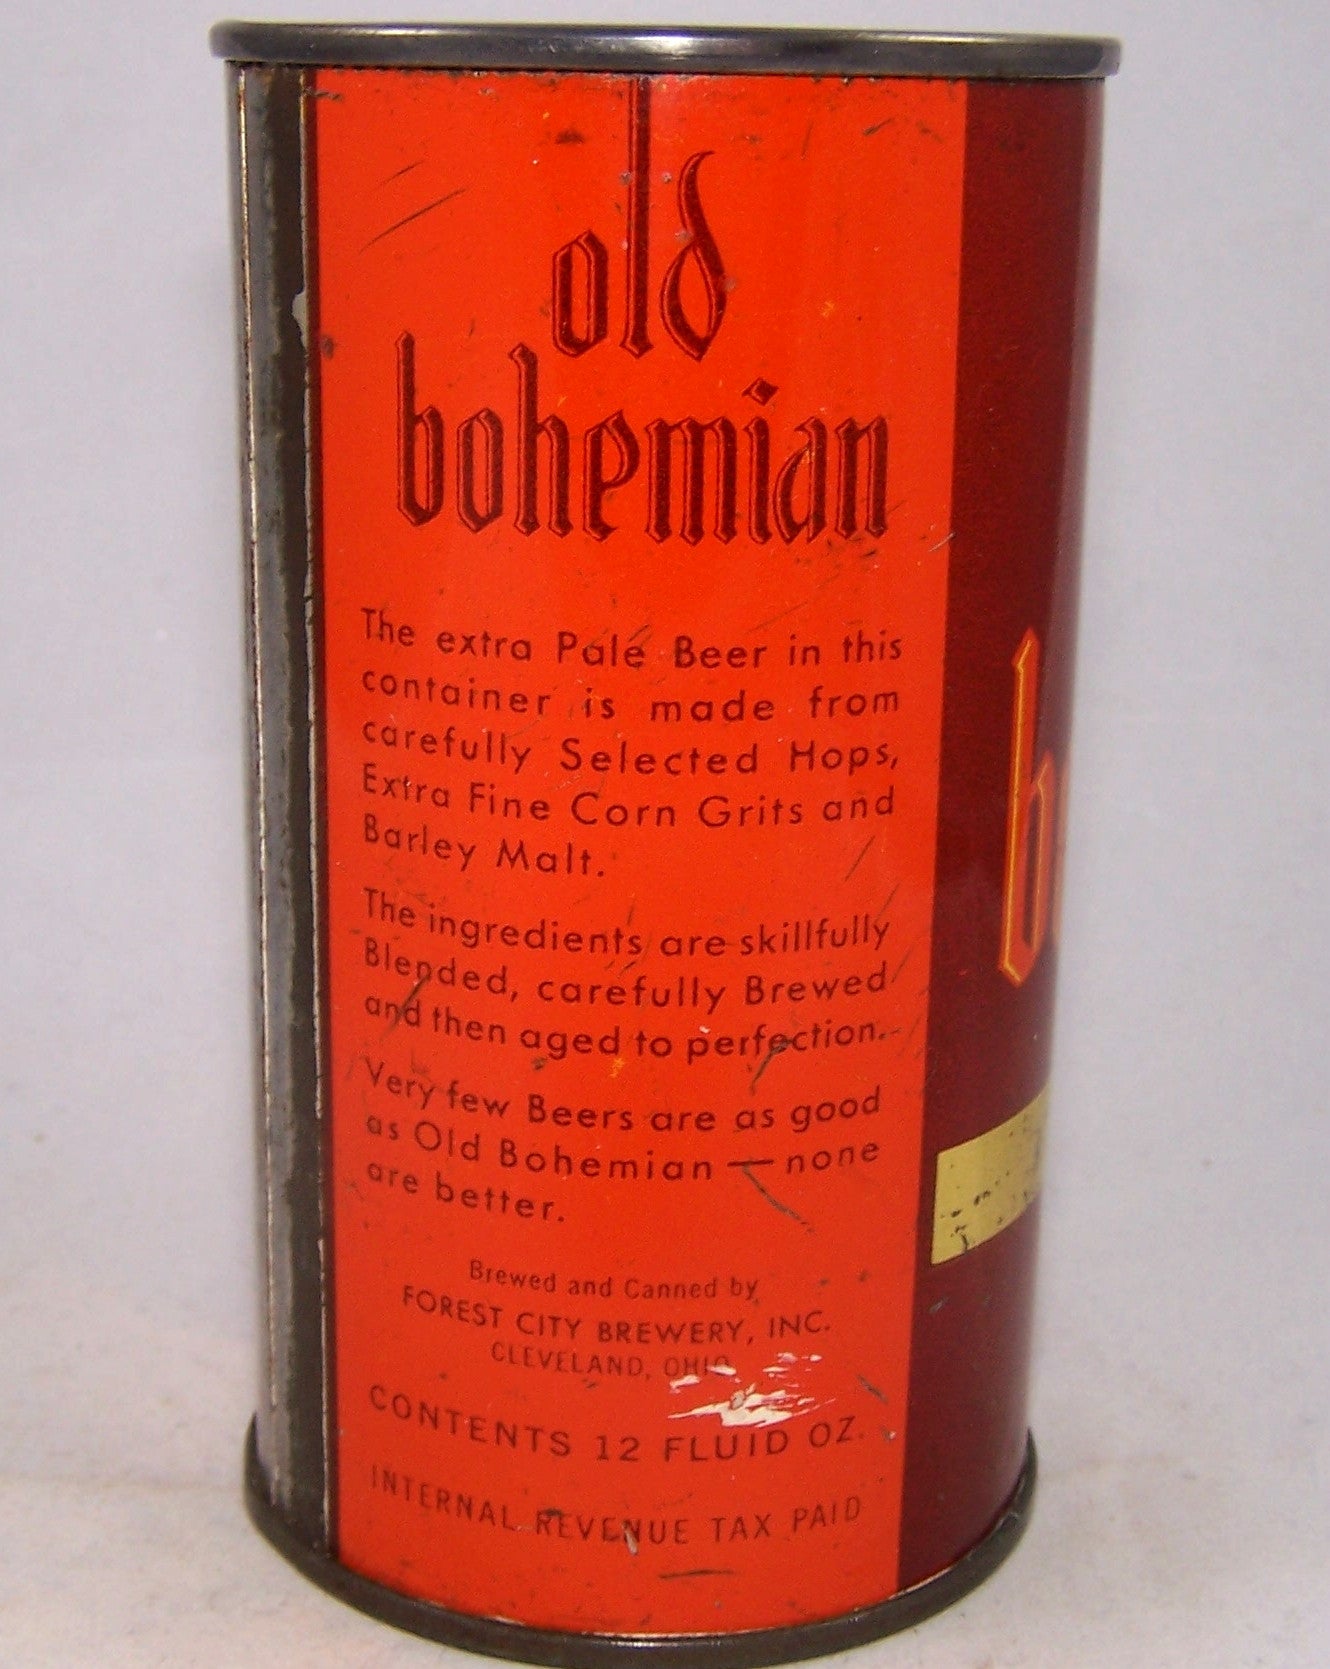 Old Bohemian Pilsner Beer, Lilek # 585, Grade 1 Sold on 02/13/16